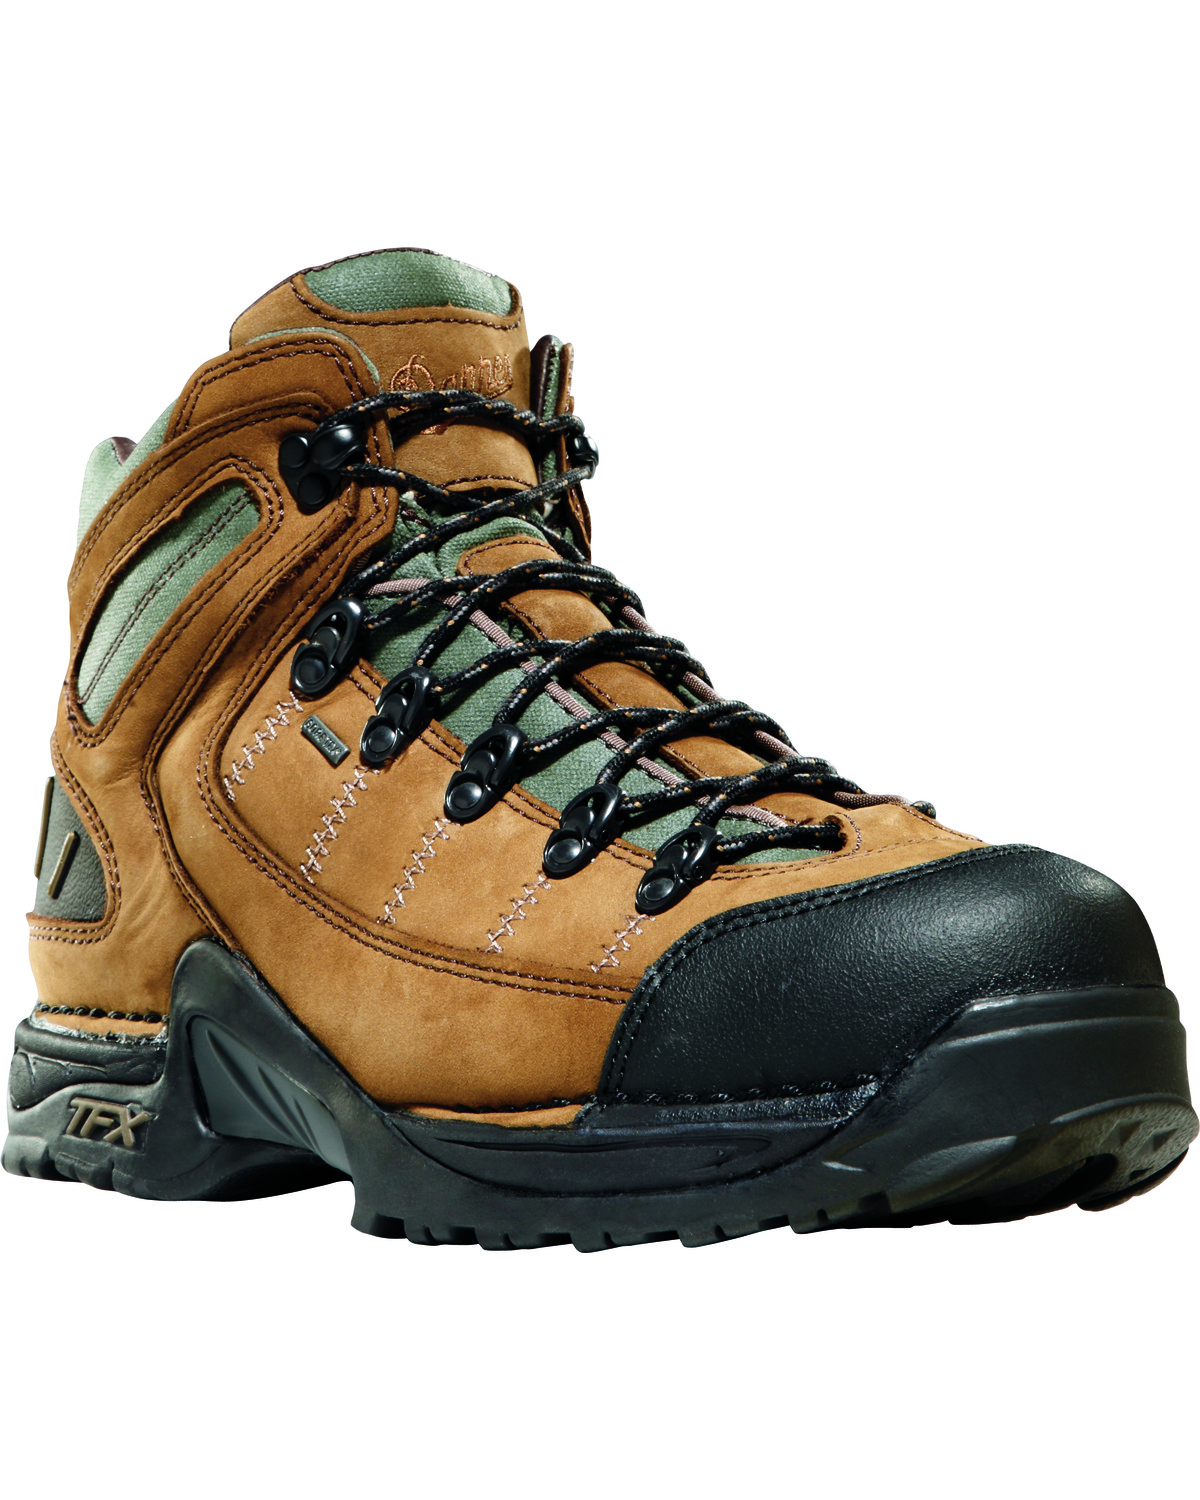 Danner Men's 453 Dark Tan 5.5" Hiking Boots